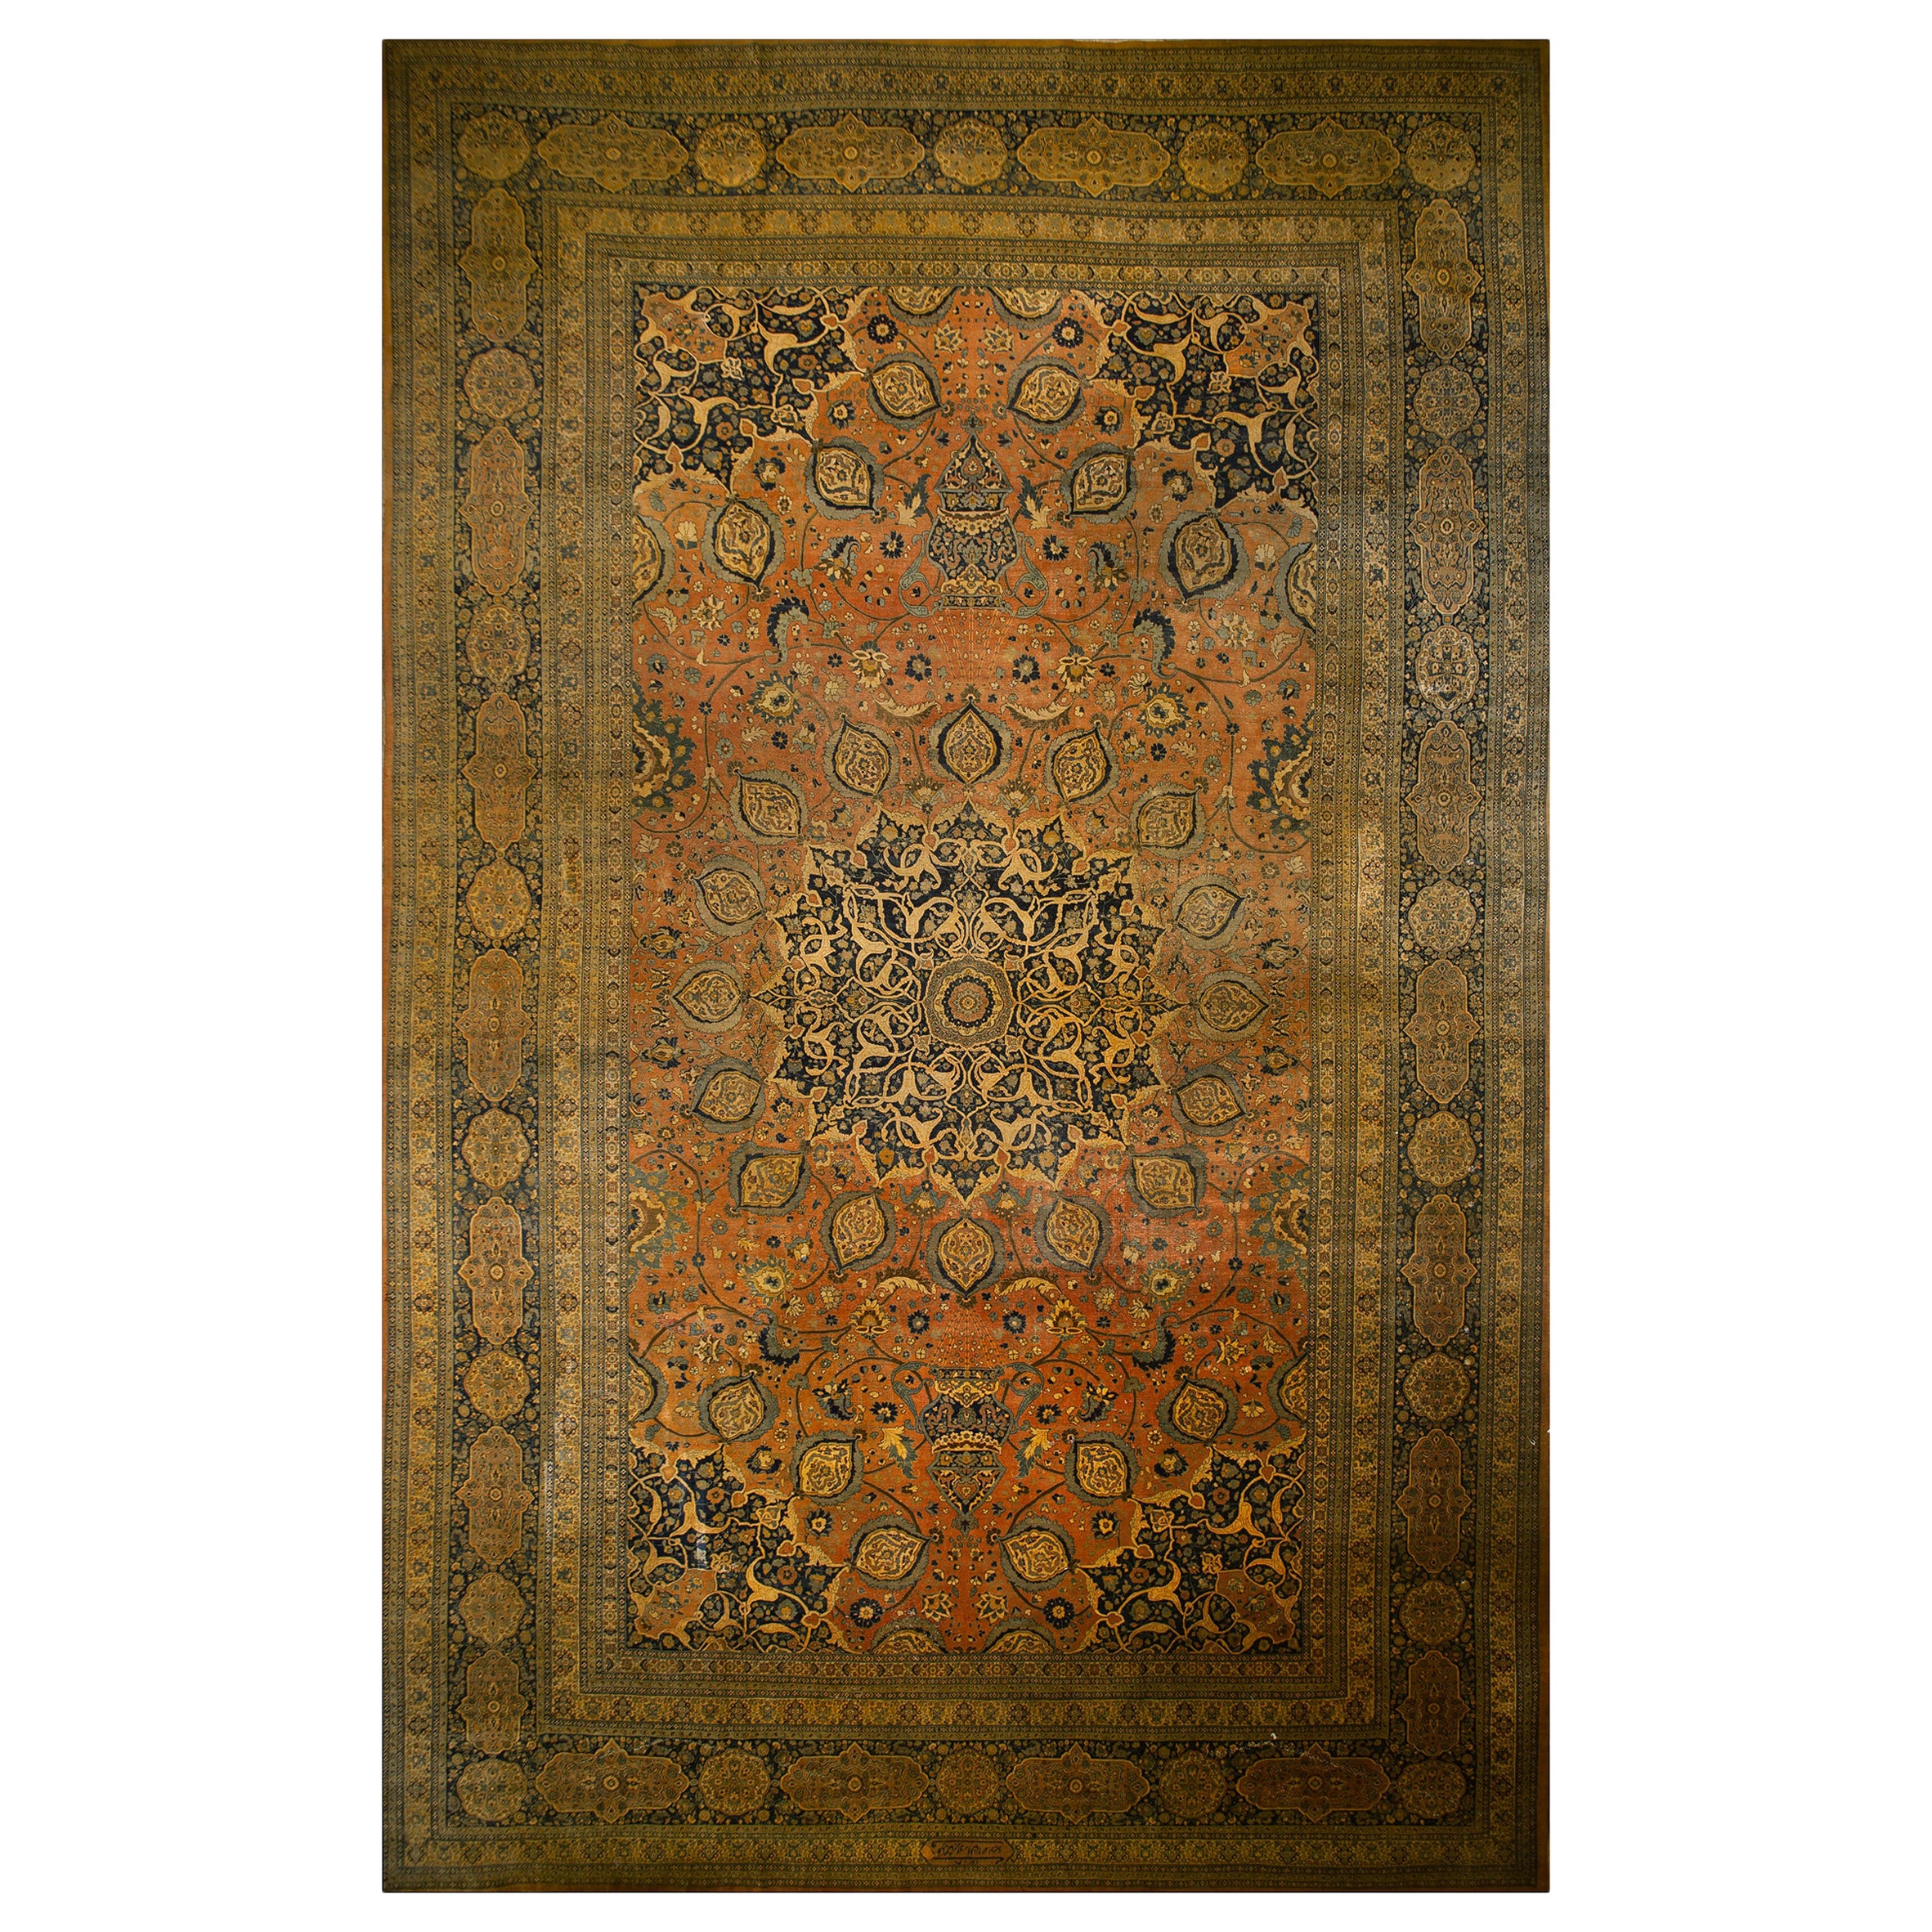 Late 19th Century Persian Tabriz Haji Jalili Carpet (14'4" x 22'7" - 437 x 688 )